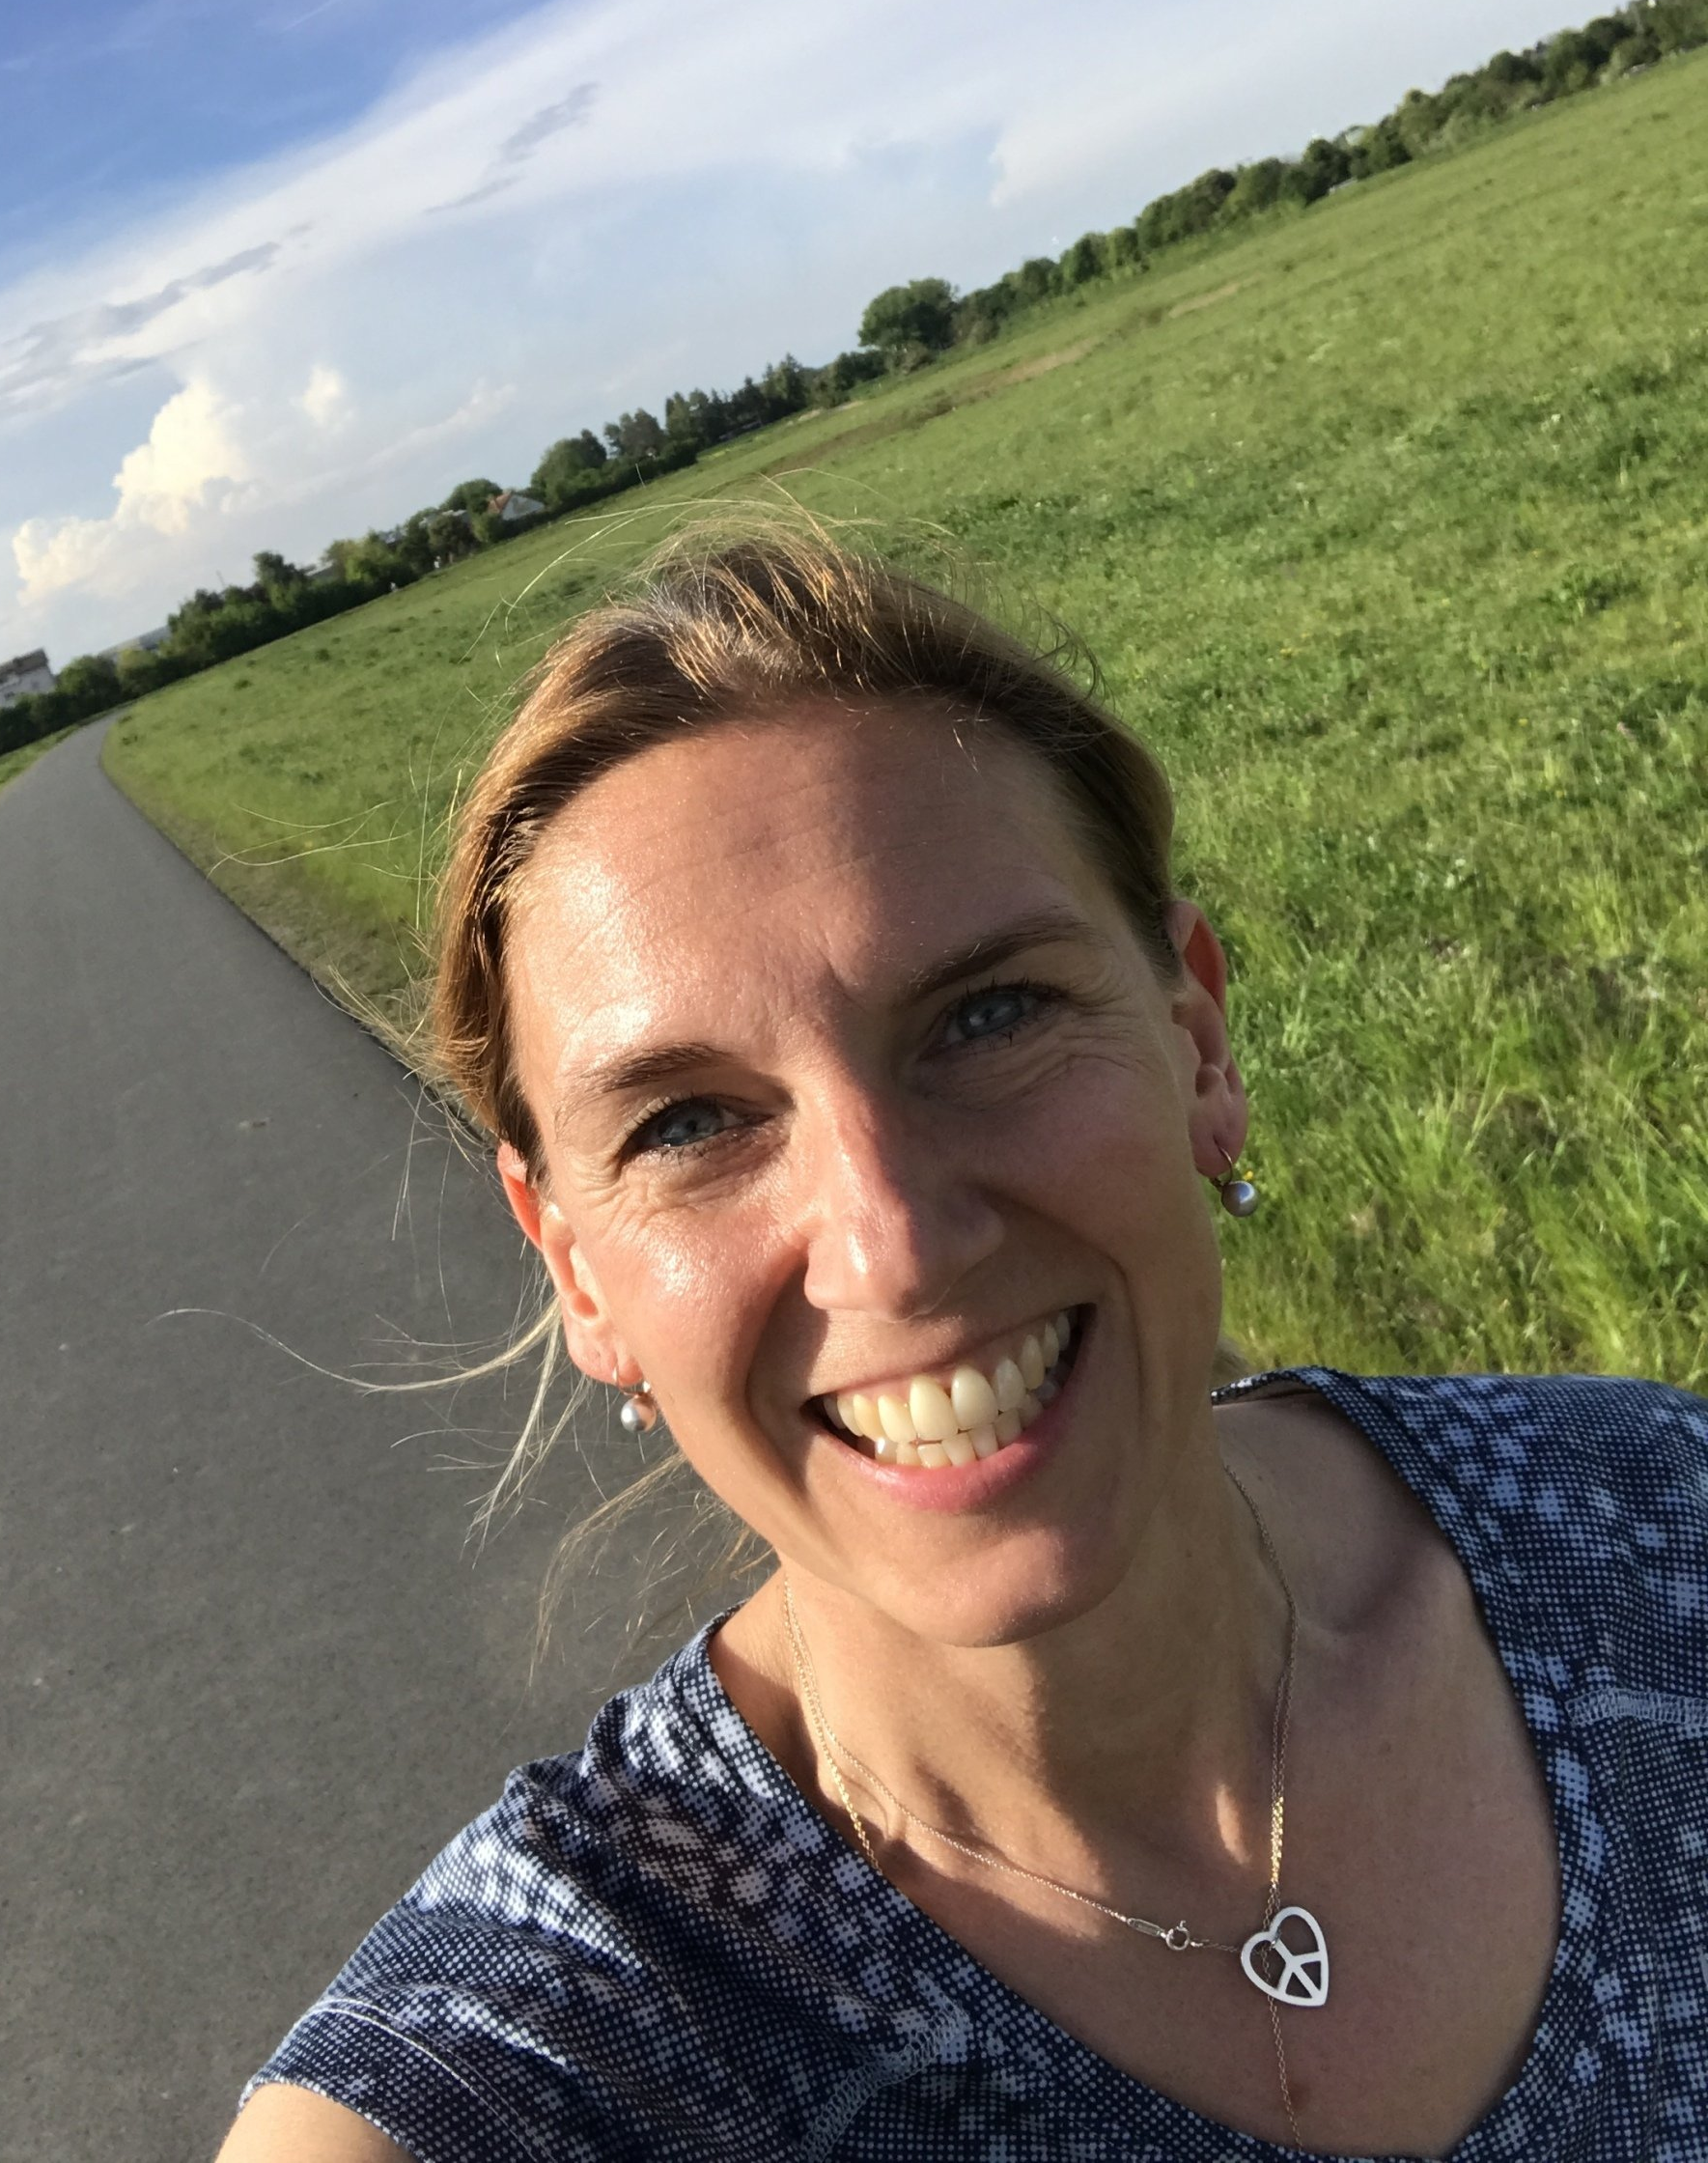 Sylvia Kurth-Frede joggt im Feld und lacht in die Kamera